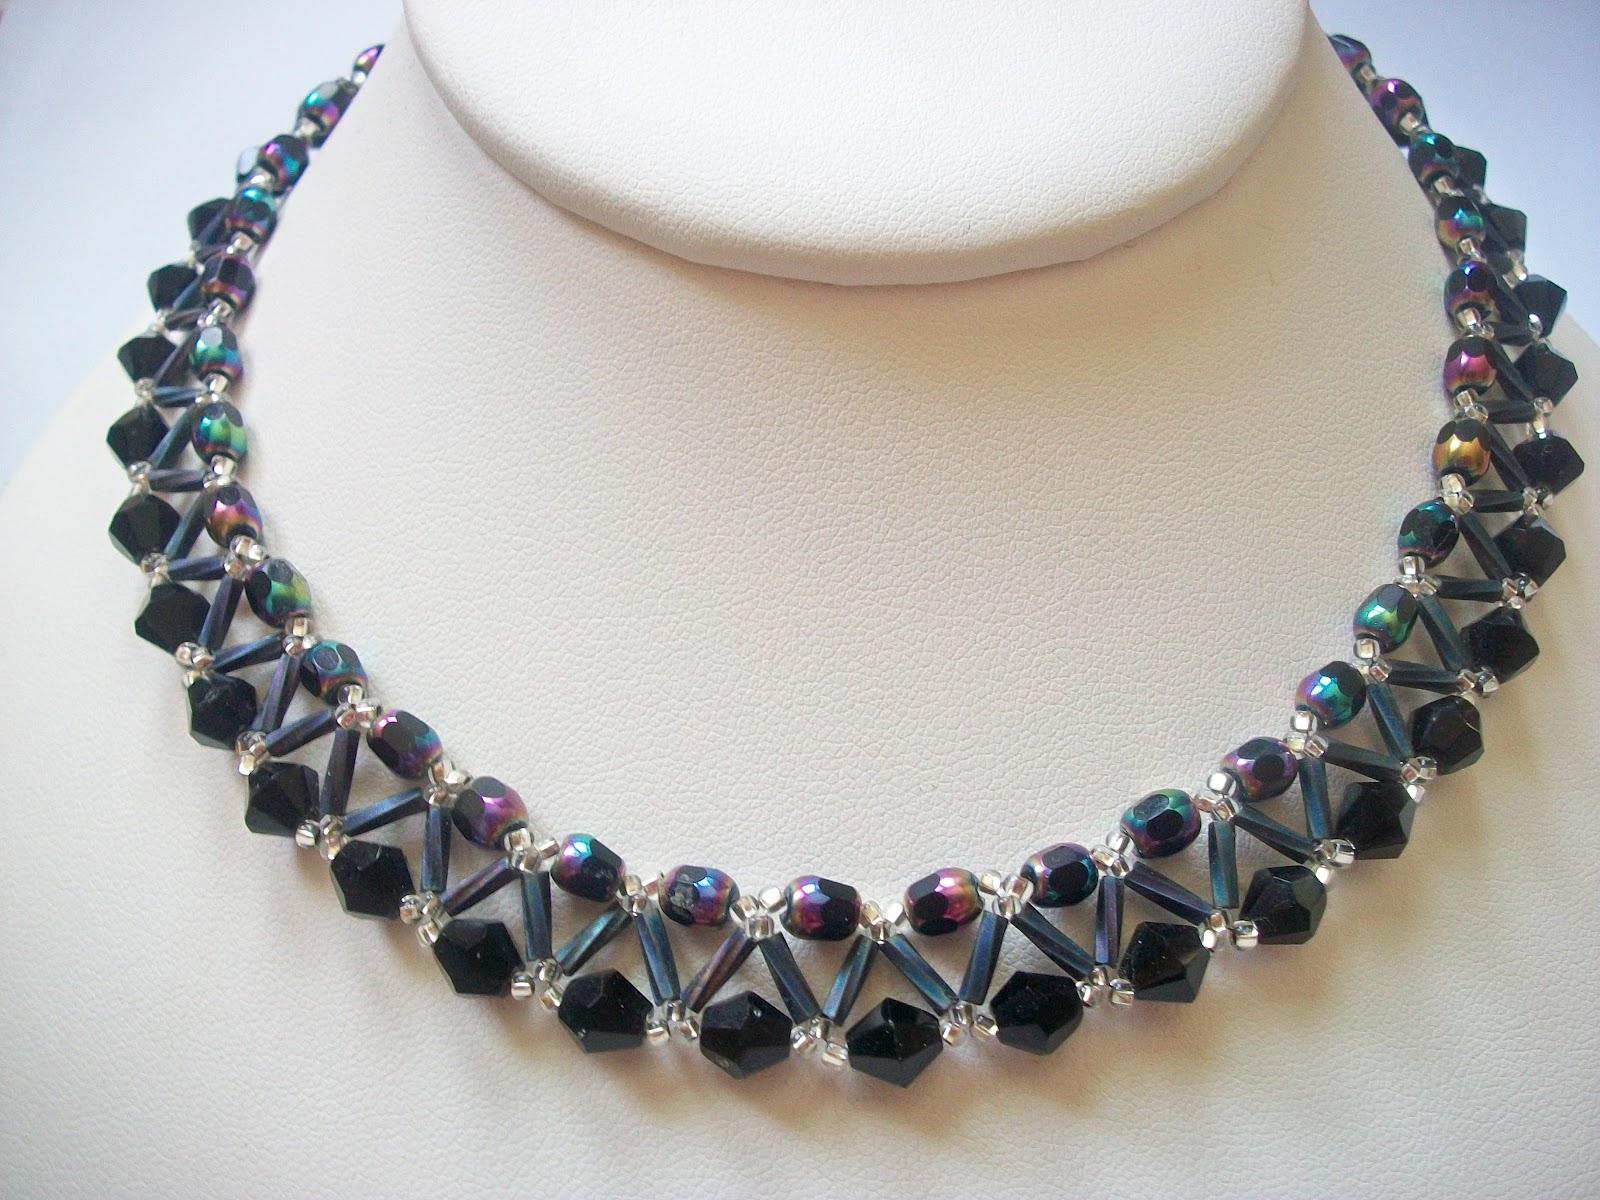 Beads necklace designs ideas